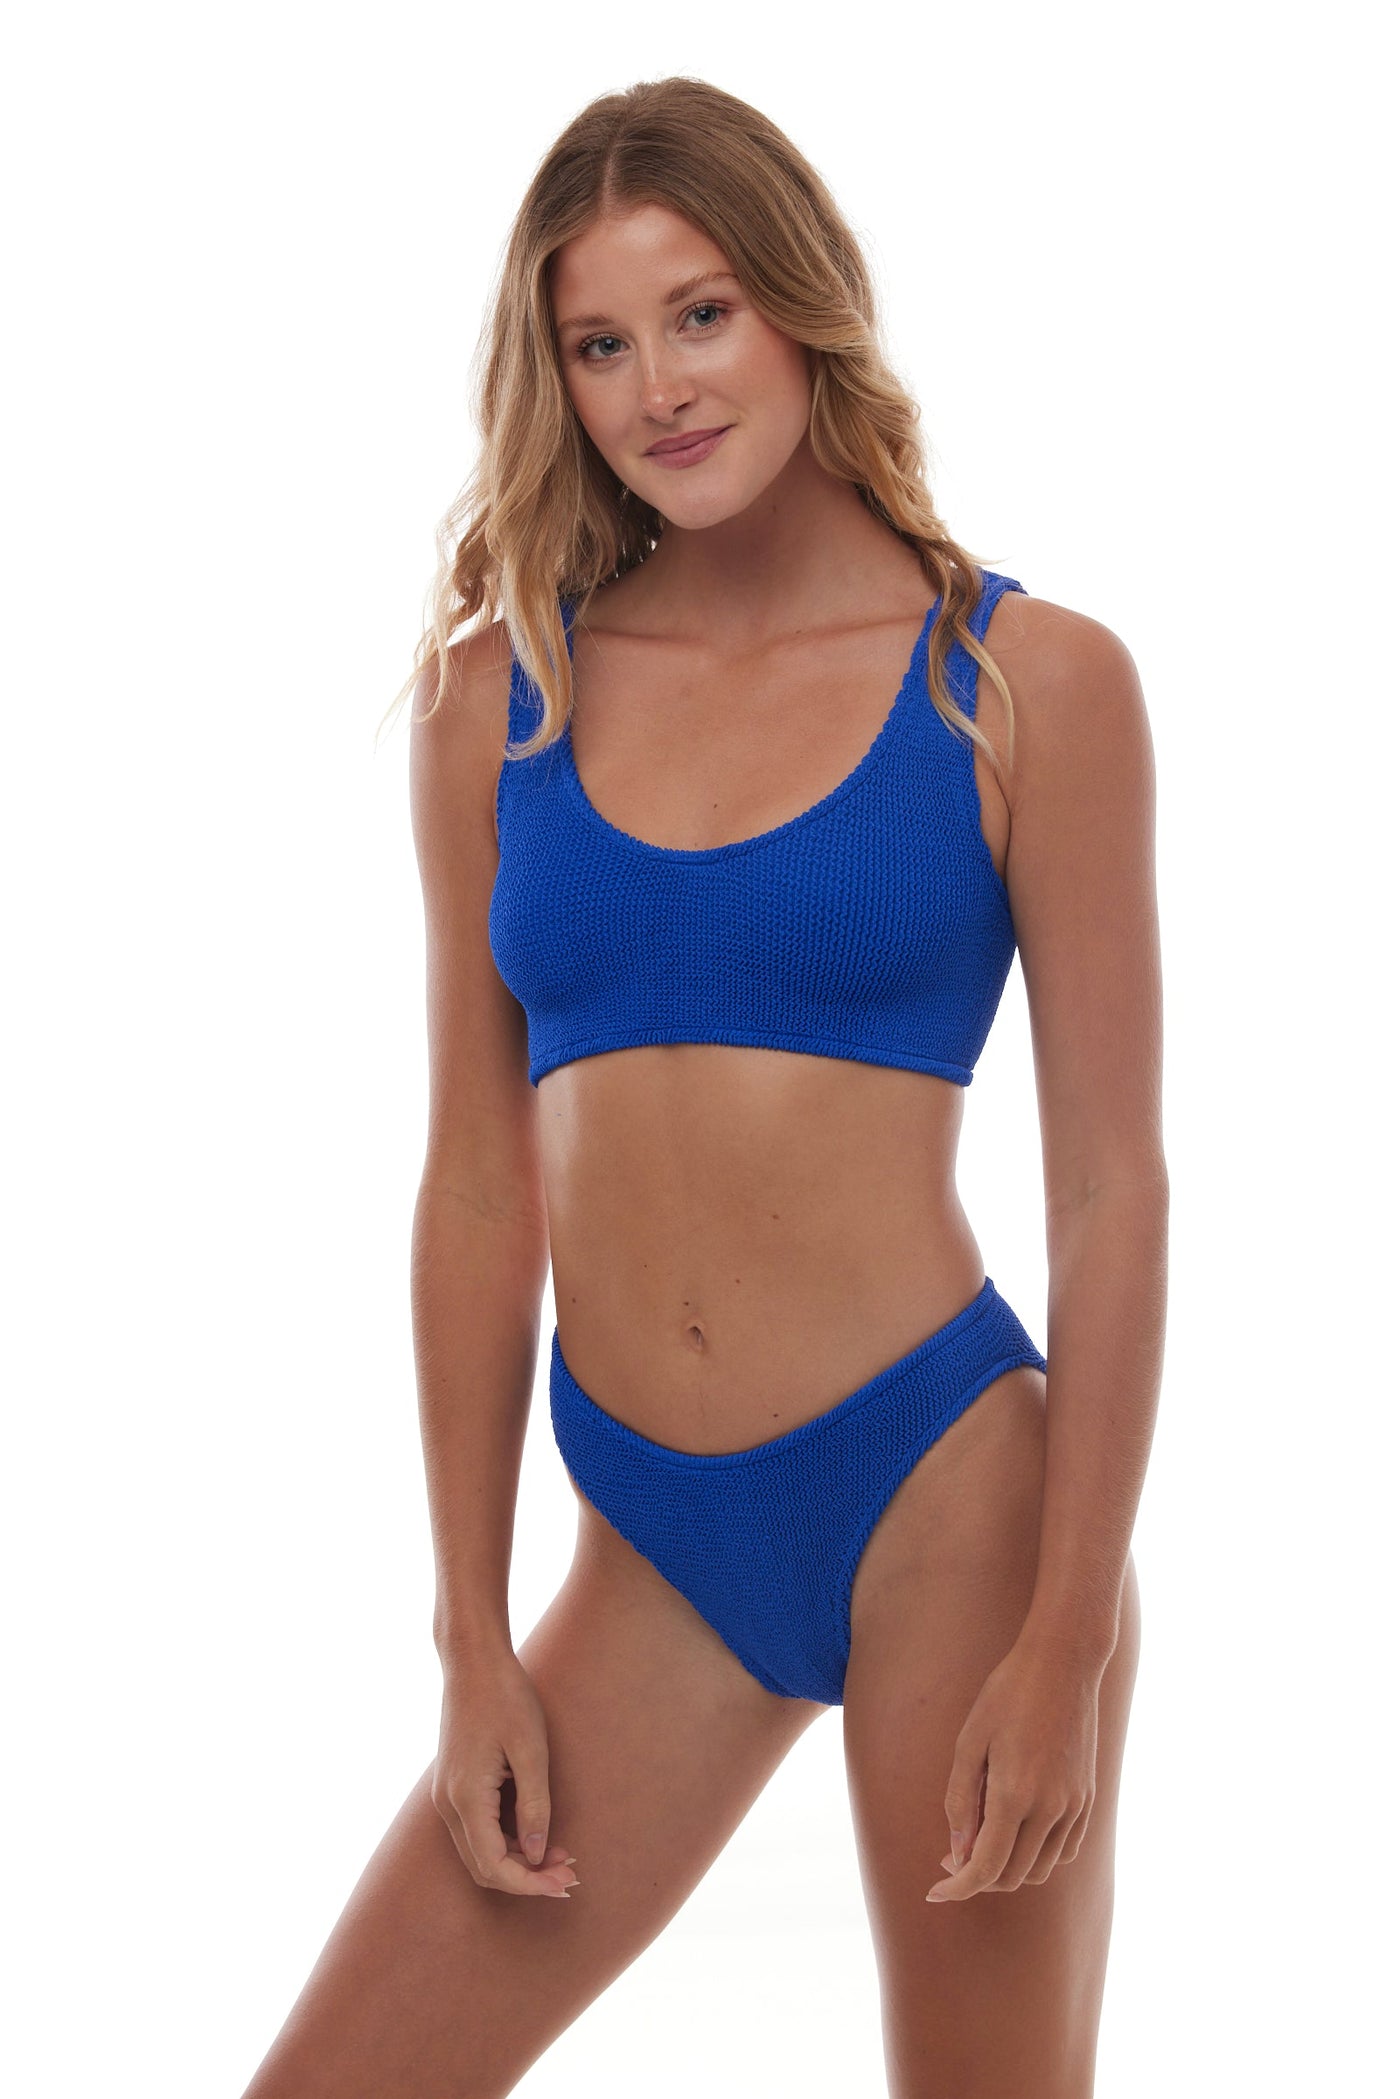 Cancun Classic Seamless One Size Bikini SET